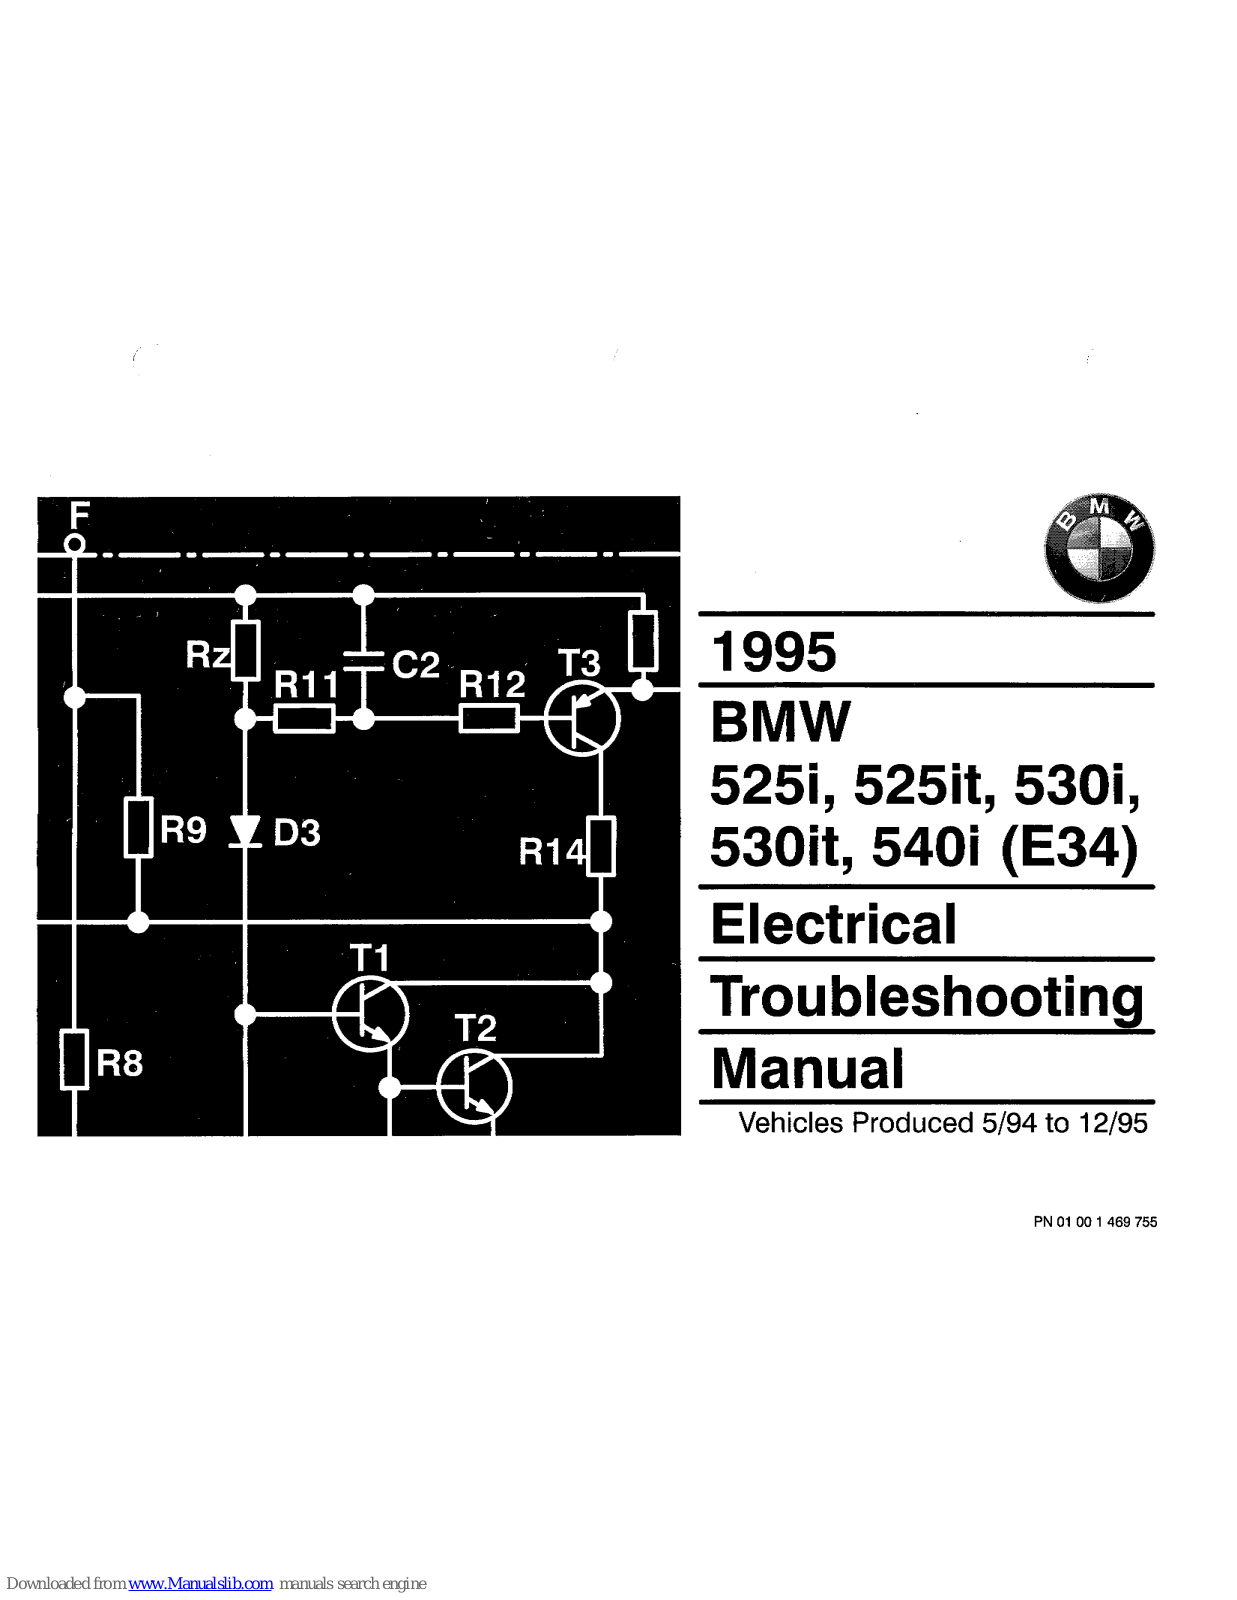 BMW 1995 525i, 1995 525it, 1995 530i, 1995 540i E34, 1995 530it Electrical Troubleshooting Manual